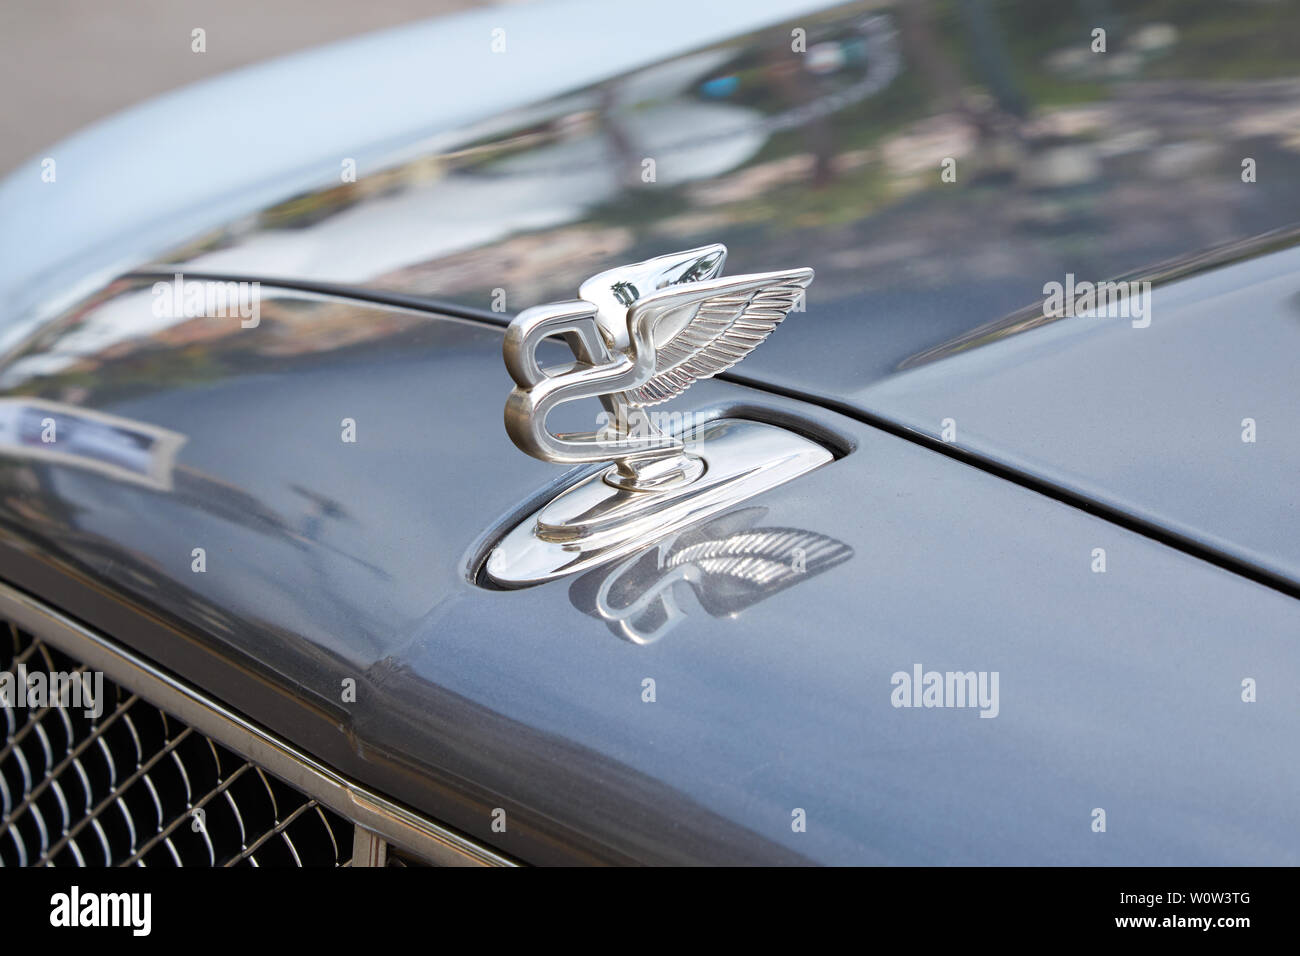 MONTE CARLO, MONACO - AUGUST 20, 2016: Bentley gray luxury car silver logo in a summer day in Monte Carlo, Monaco. Stock Photo